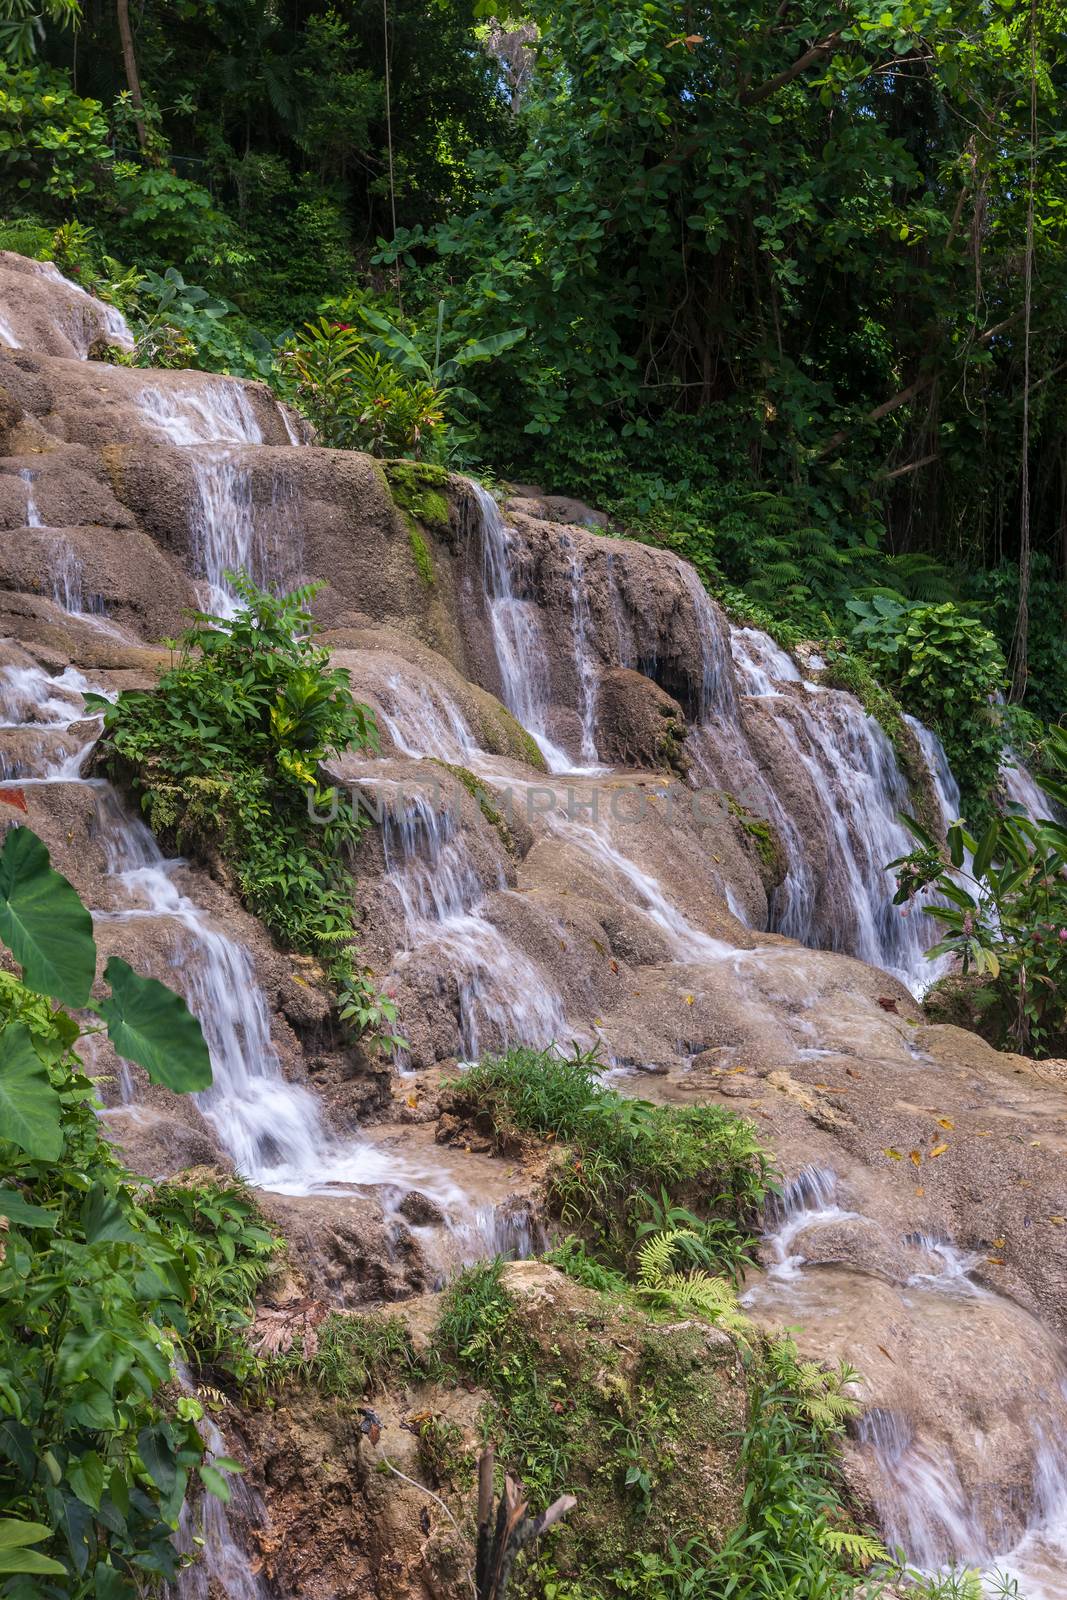 The picturesque Dunn's River Falls. Jamaica, Caribbean